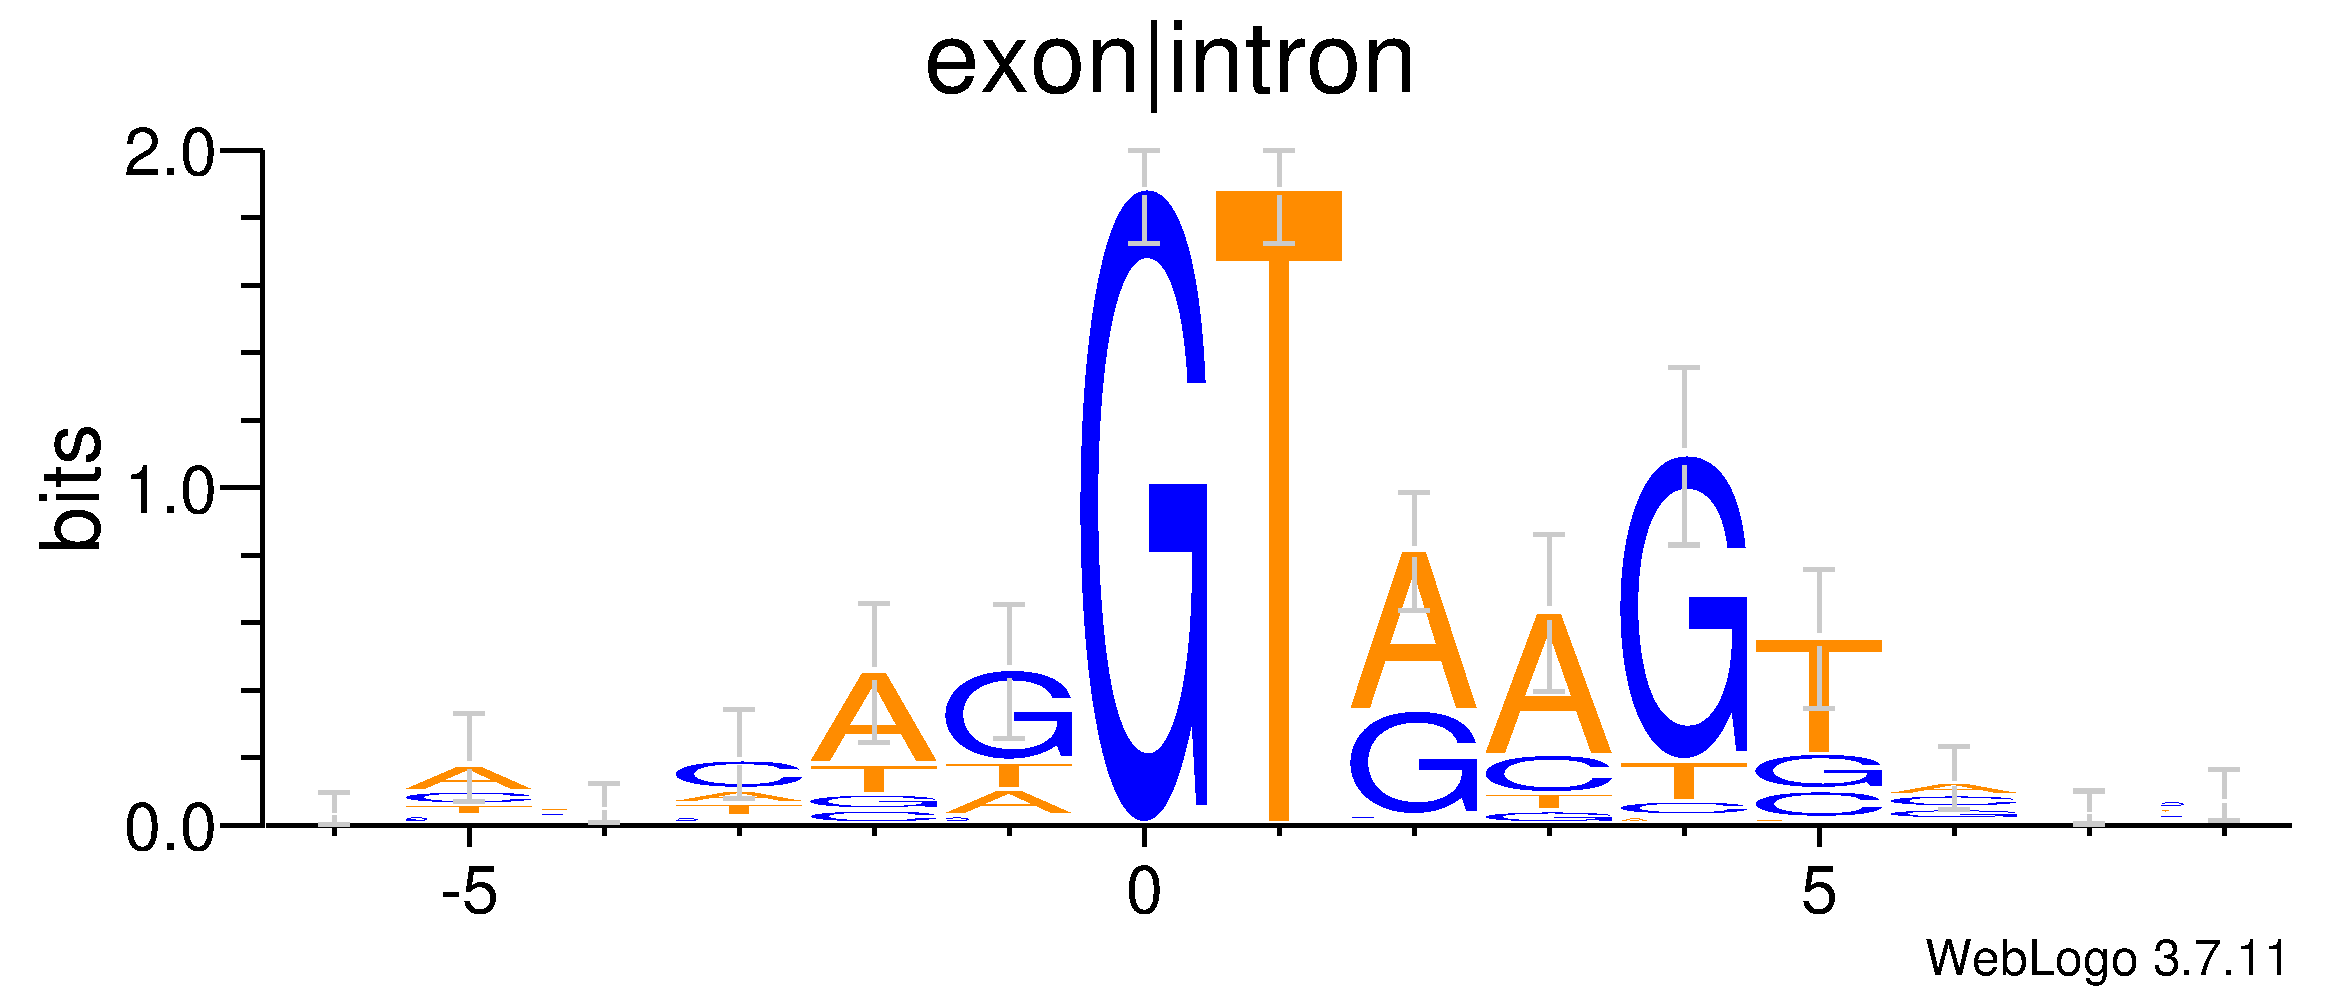 exon-intron image